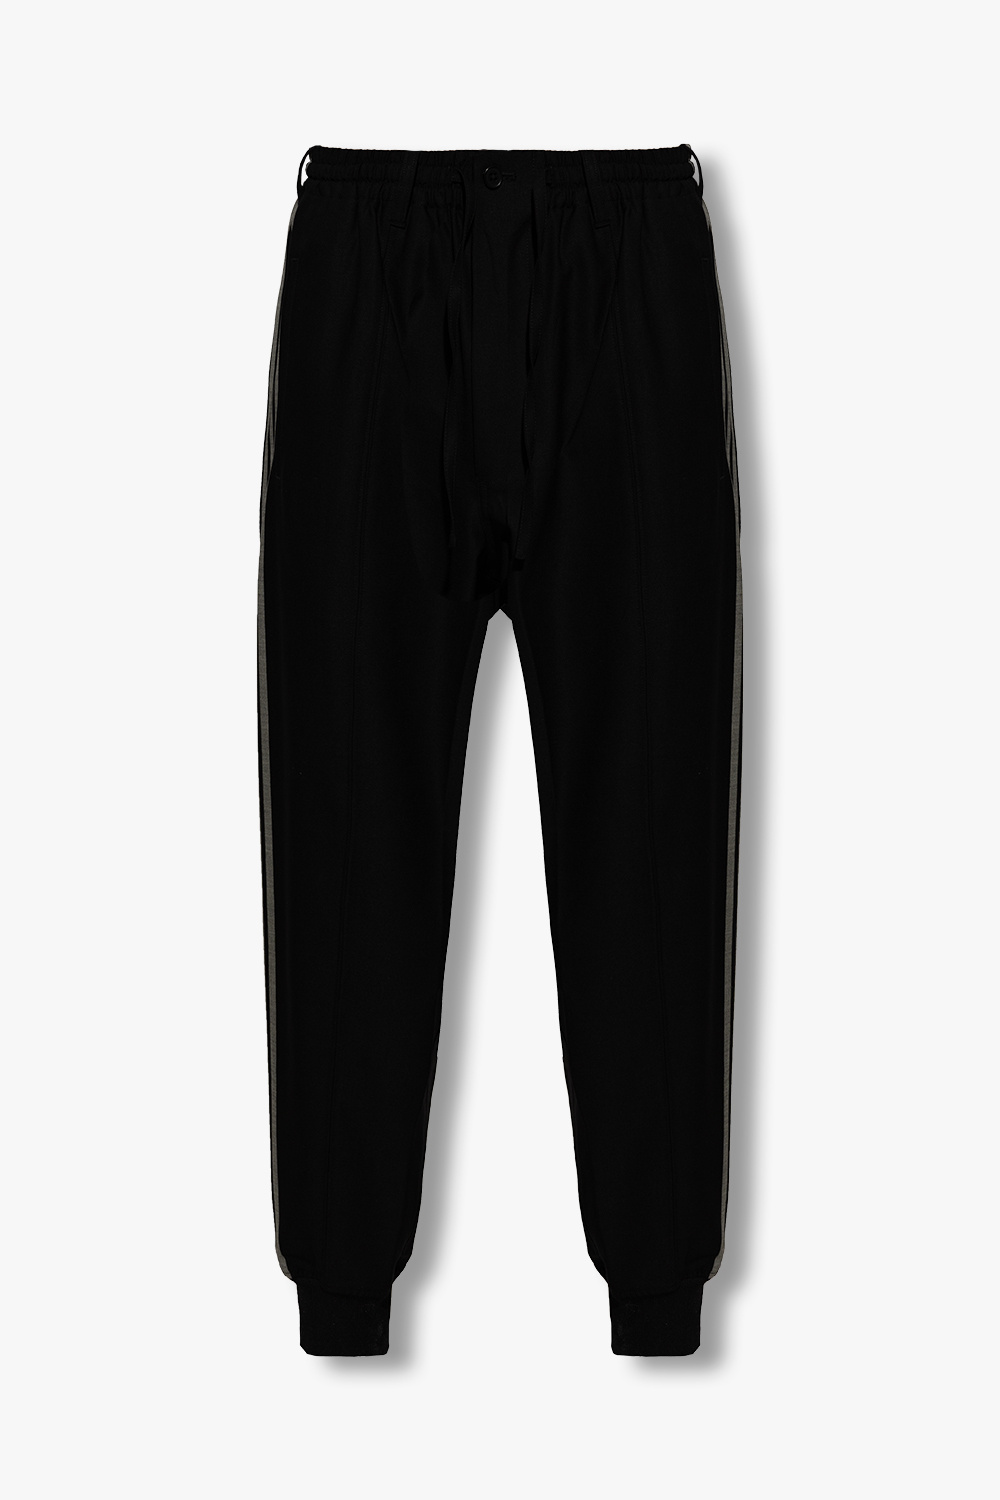 3 Yohji Yamamoto - fitting trousers Y - SchaferandweinerShops Tonga - Tall  Skinny Jeans With Palm Tree Print - Black Relaxed